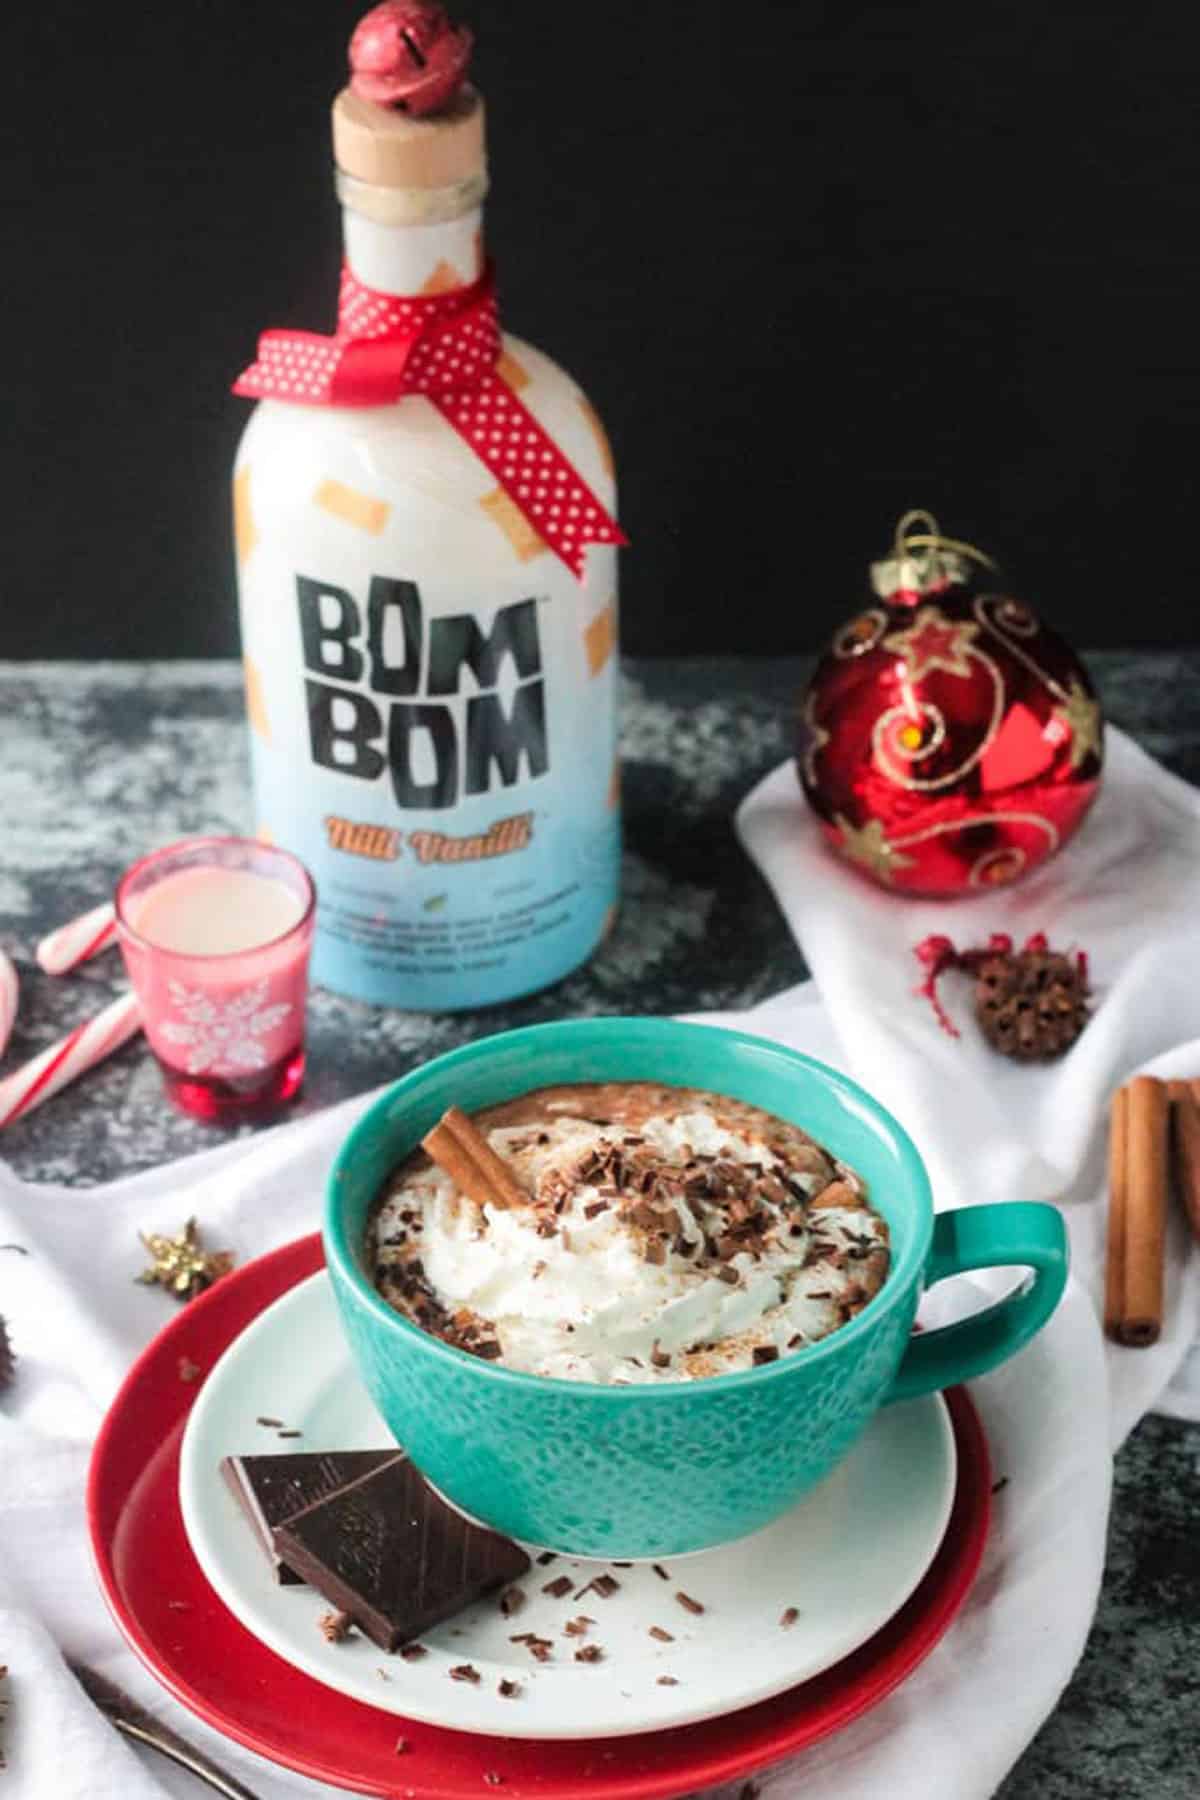 Bottle of Bom Bom almondmilk rum liquor behind a mug of hot chocolate.